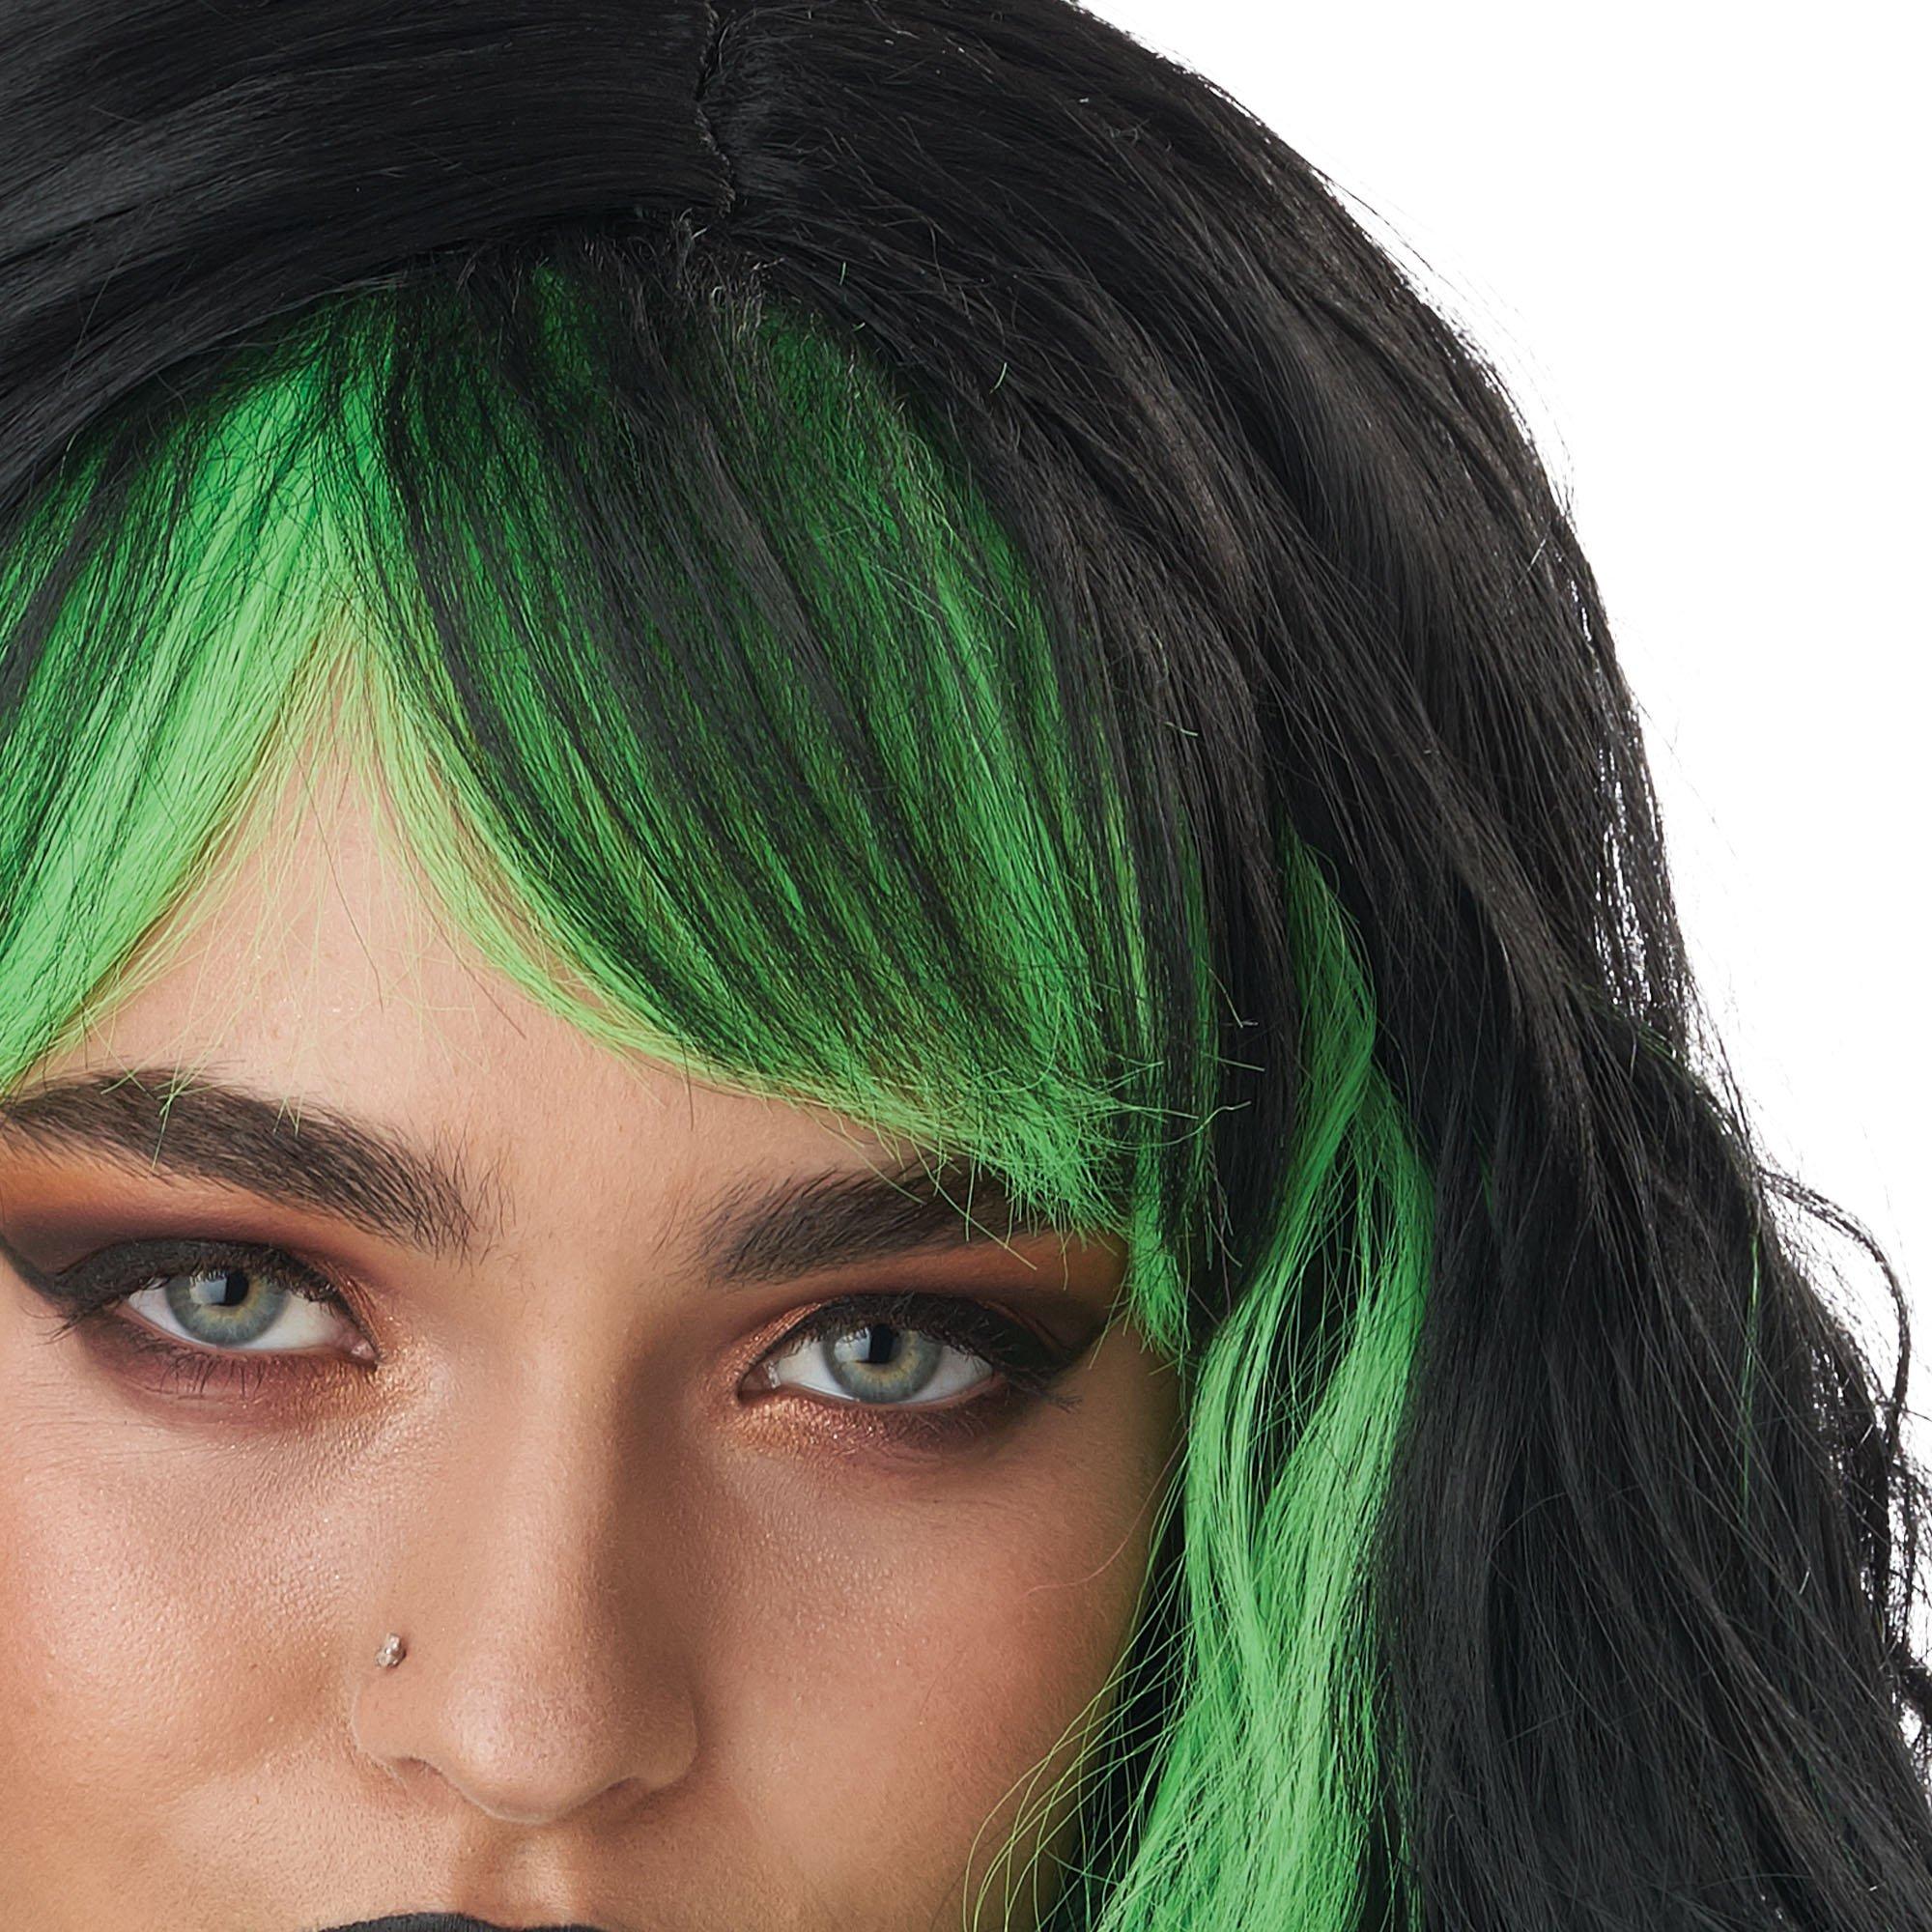 black hair green bangs